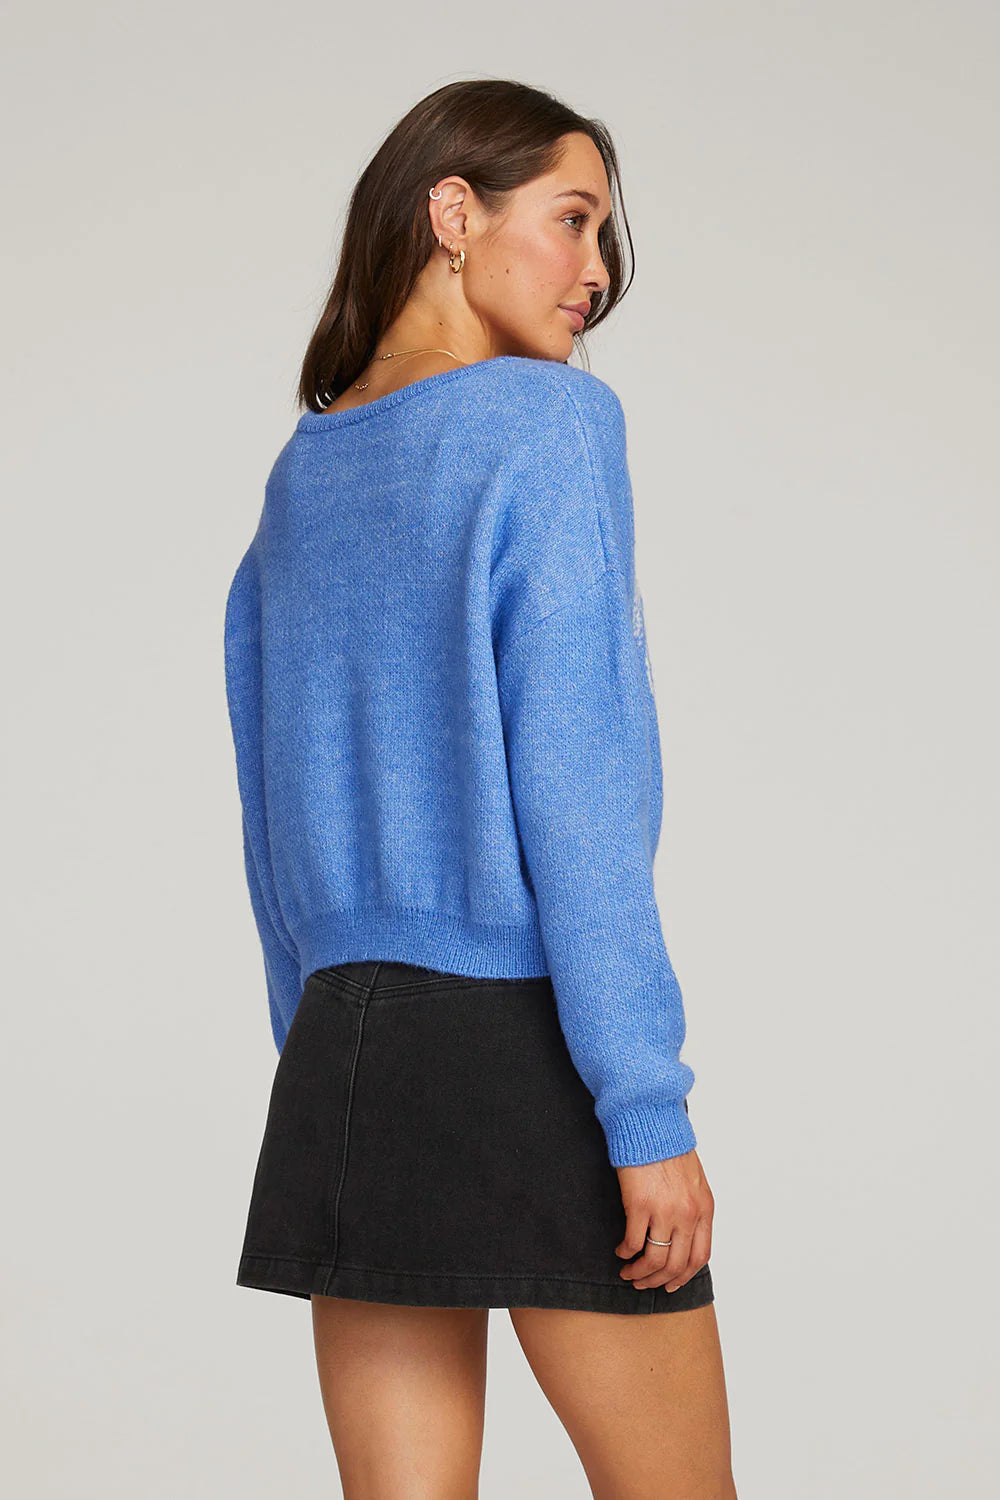 Ganna Sweater | Pacific